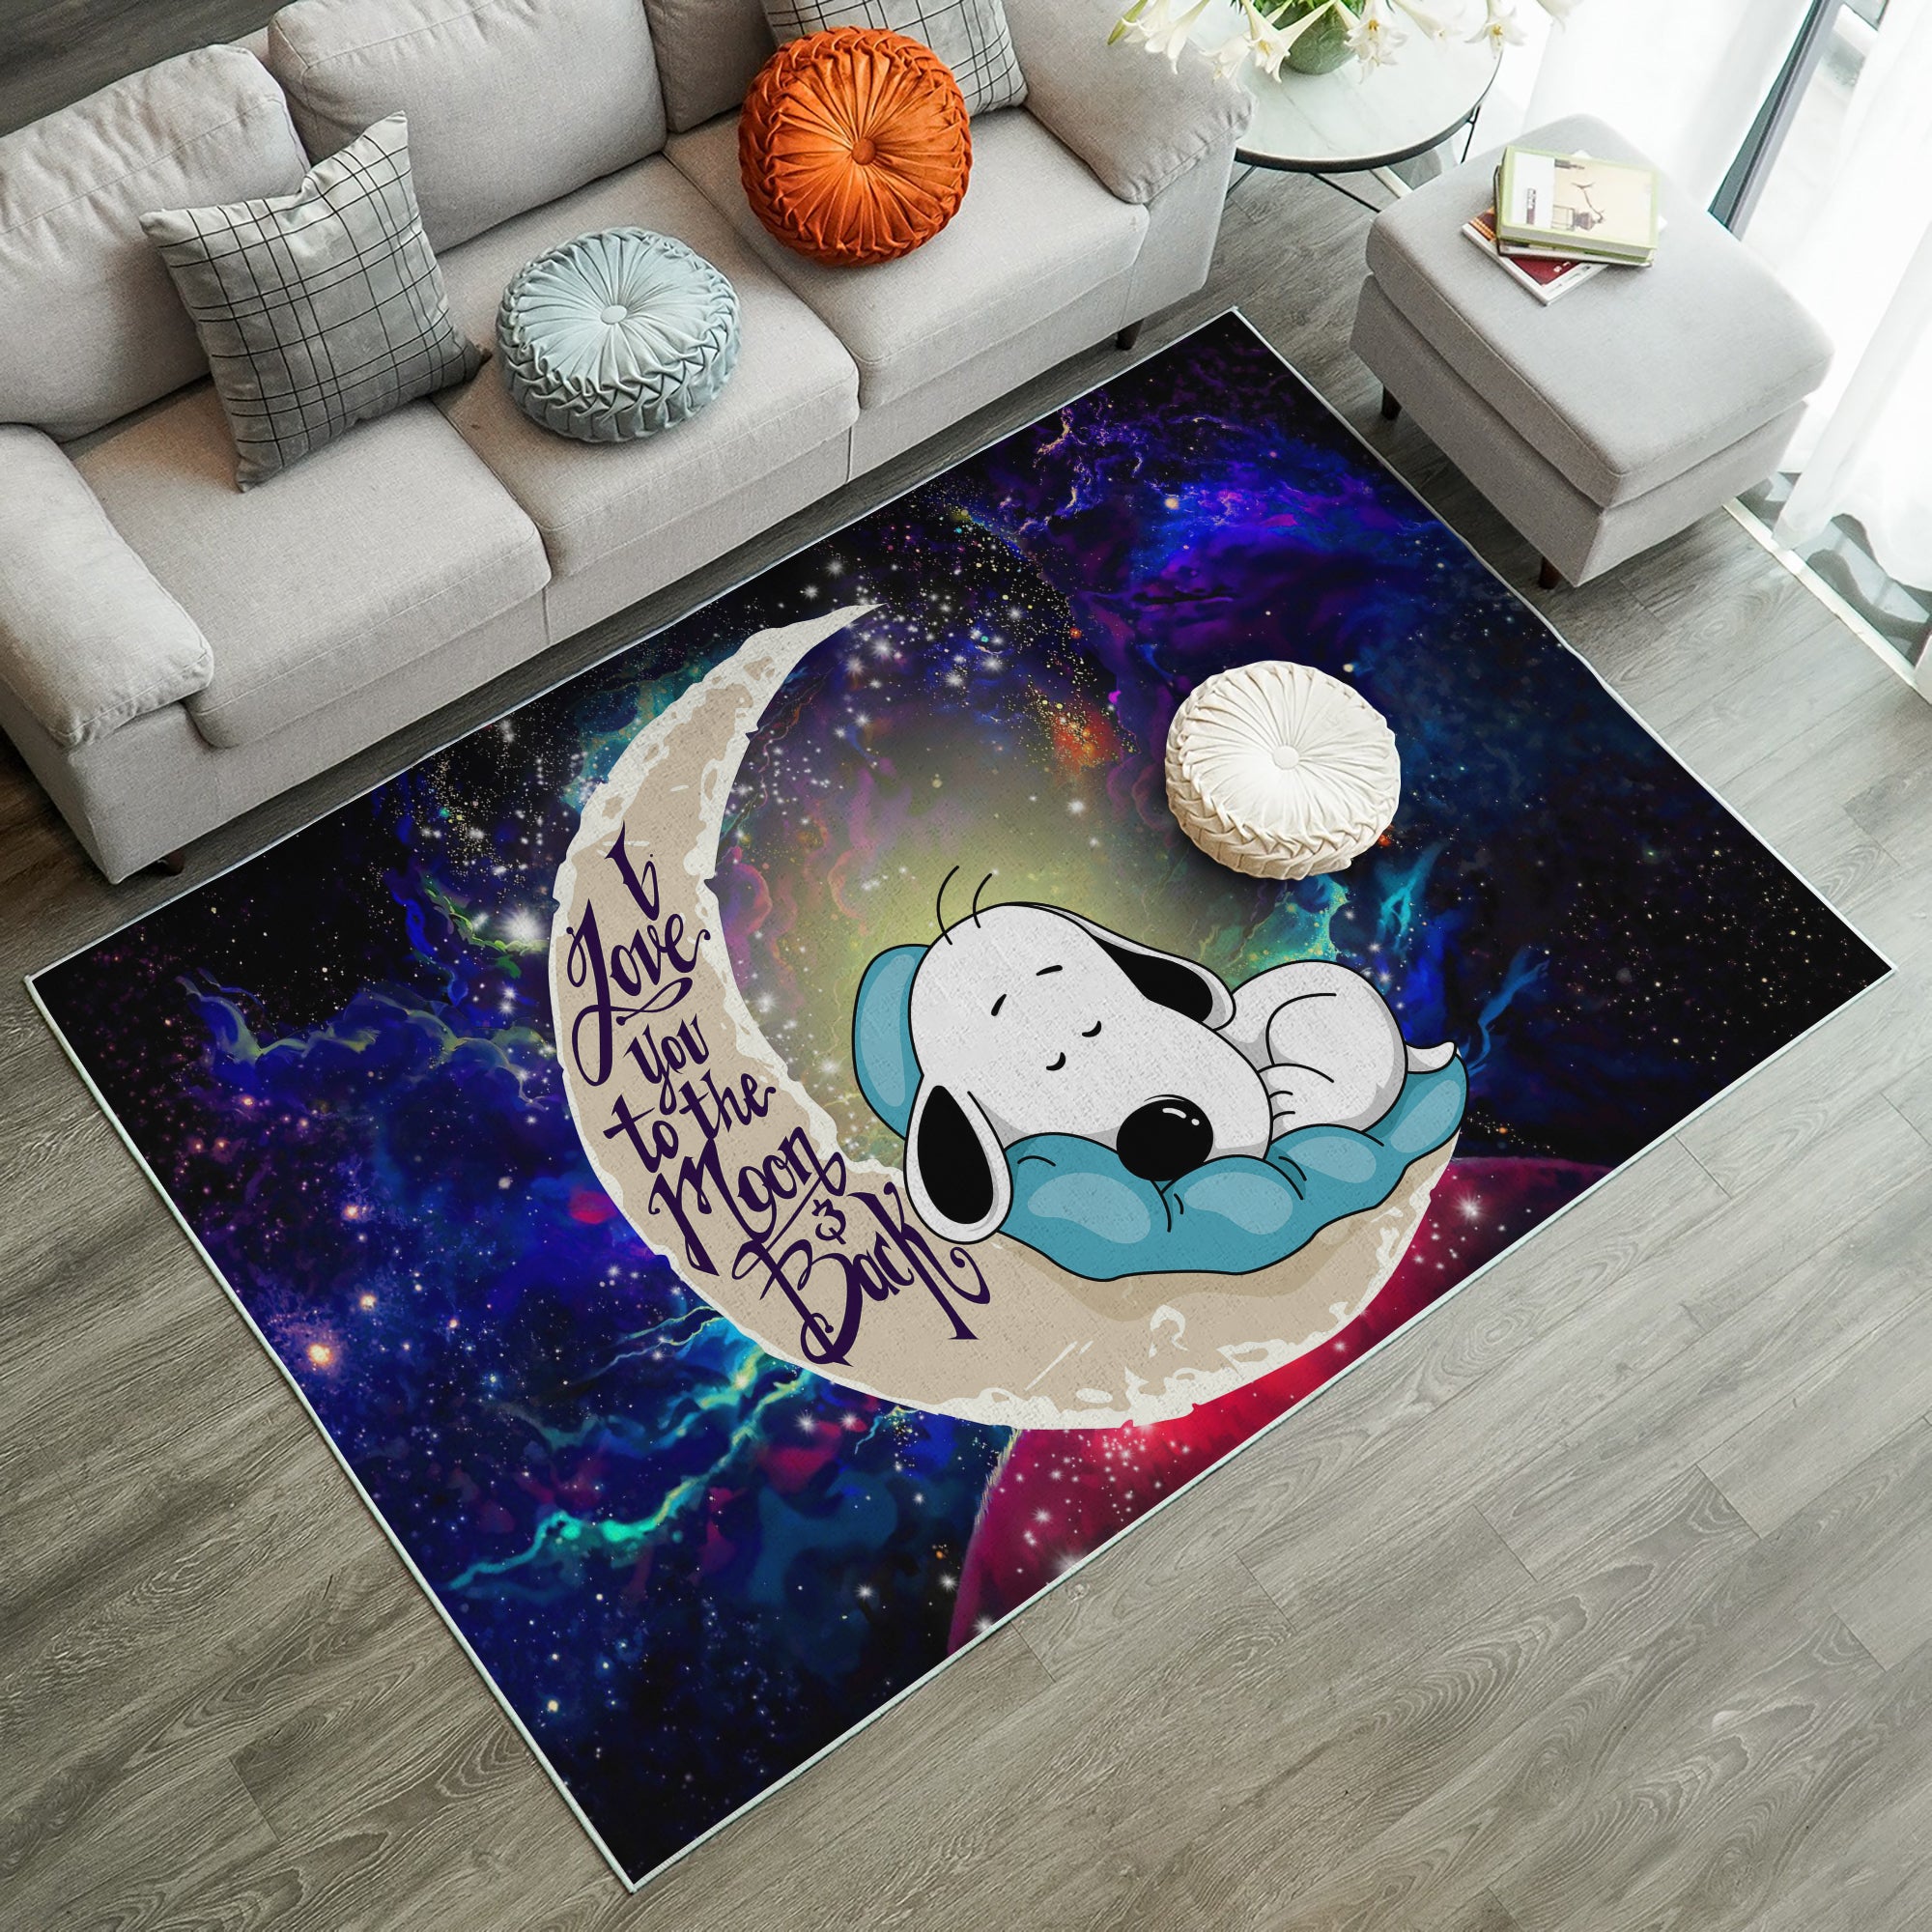 Snoopy Dog Sleep Love You To The Moon Galaxy Carpet Rug Home Room Decor